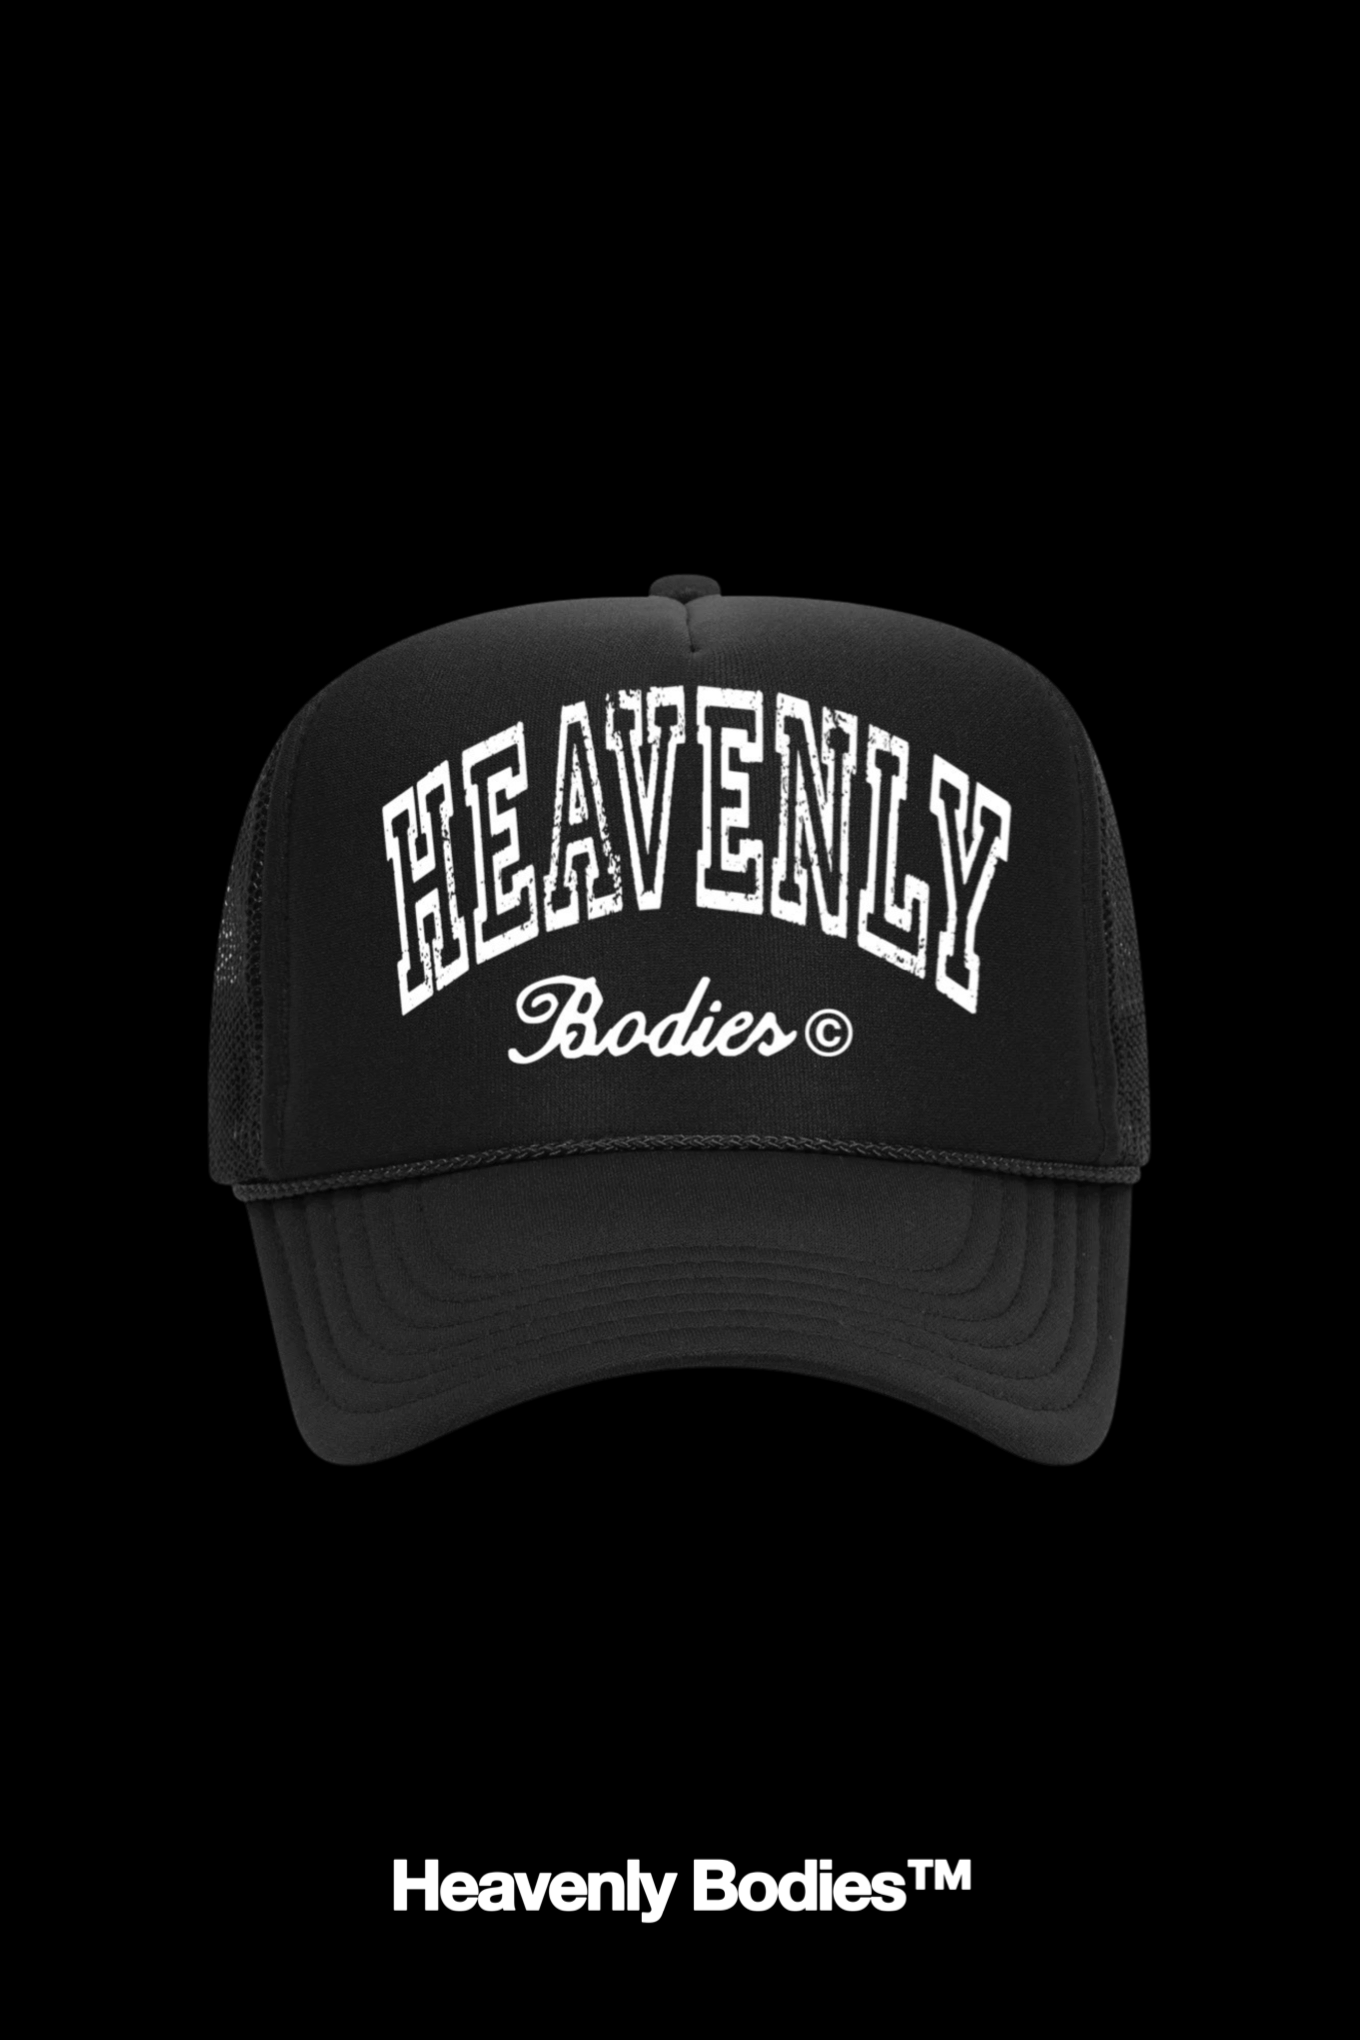 All Black "Heavenly Bodies" Trucker Hat